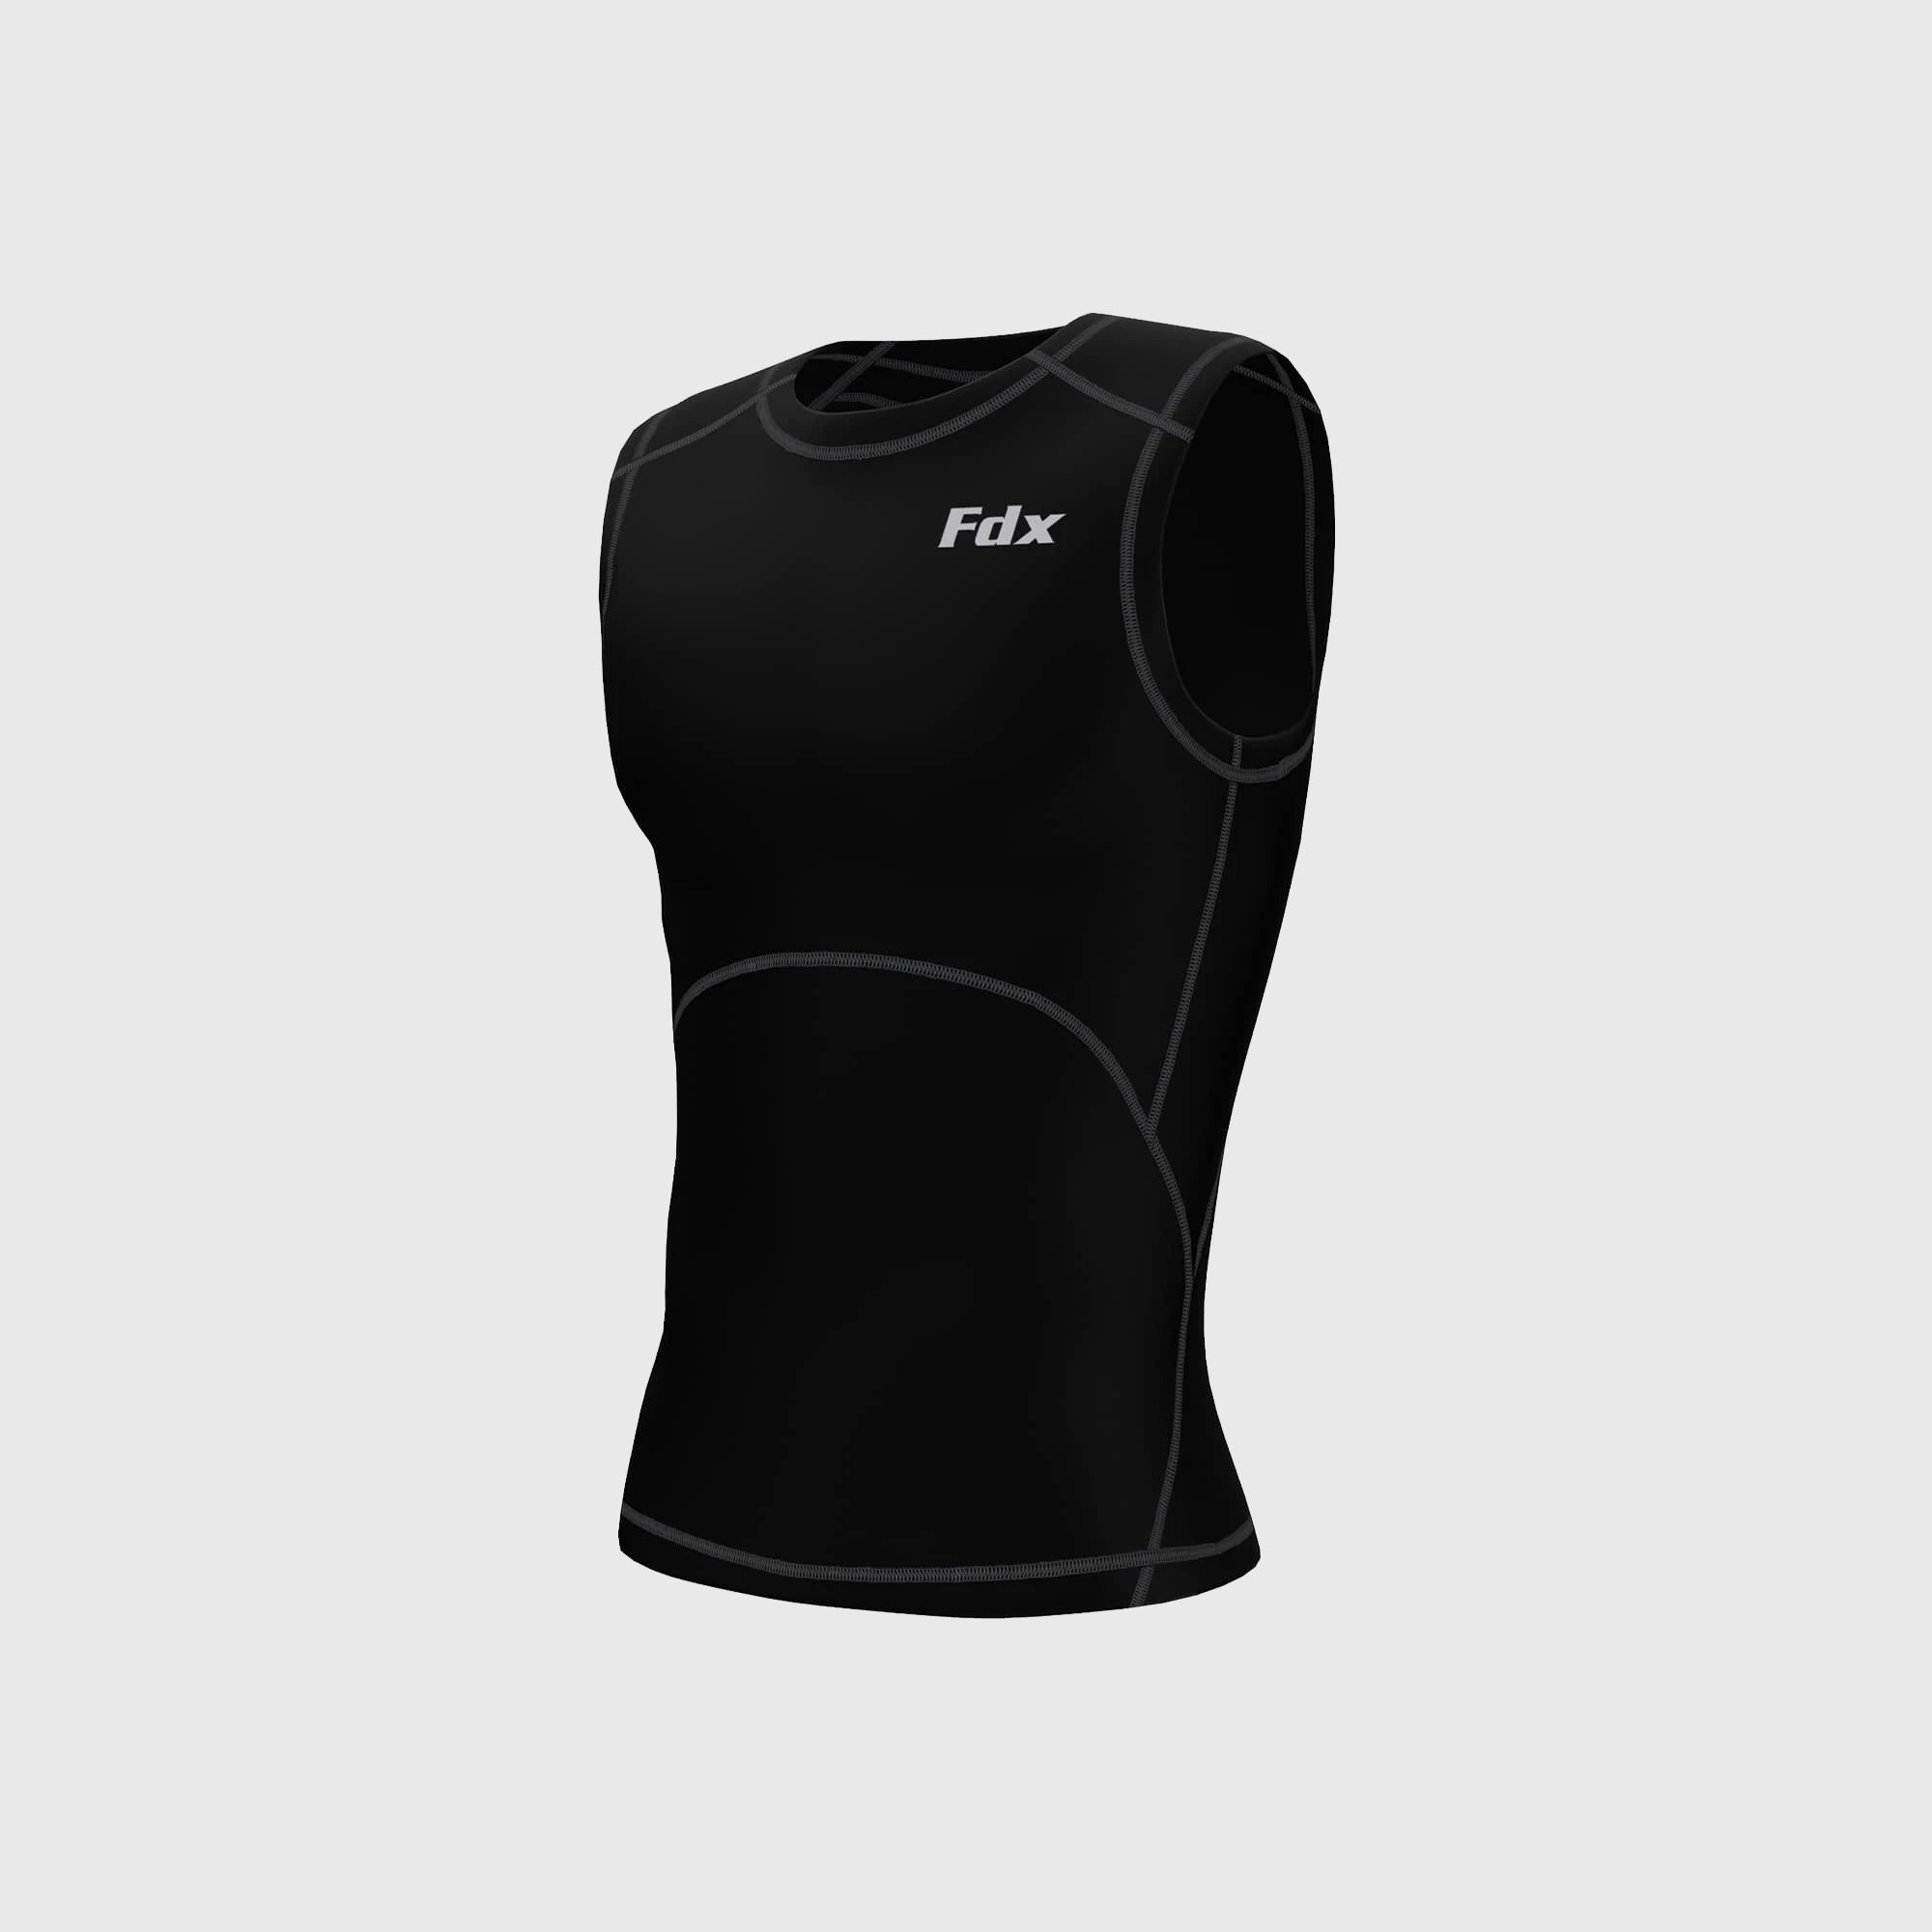 Fdx Mens Grey Sleeveless Compression Top Running Gym Workout Wear Rash Guard Stretchable Breathable Baselayer Shirt - Aeroform